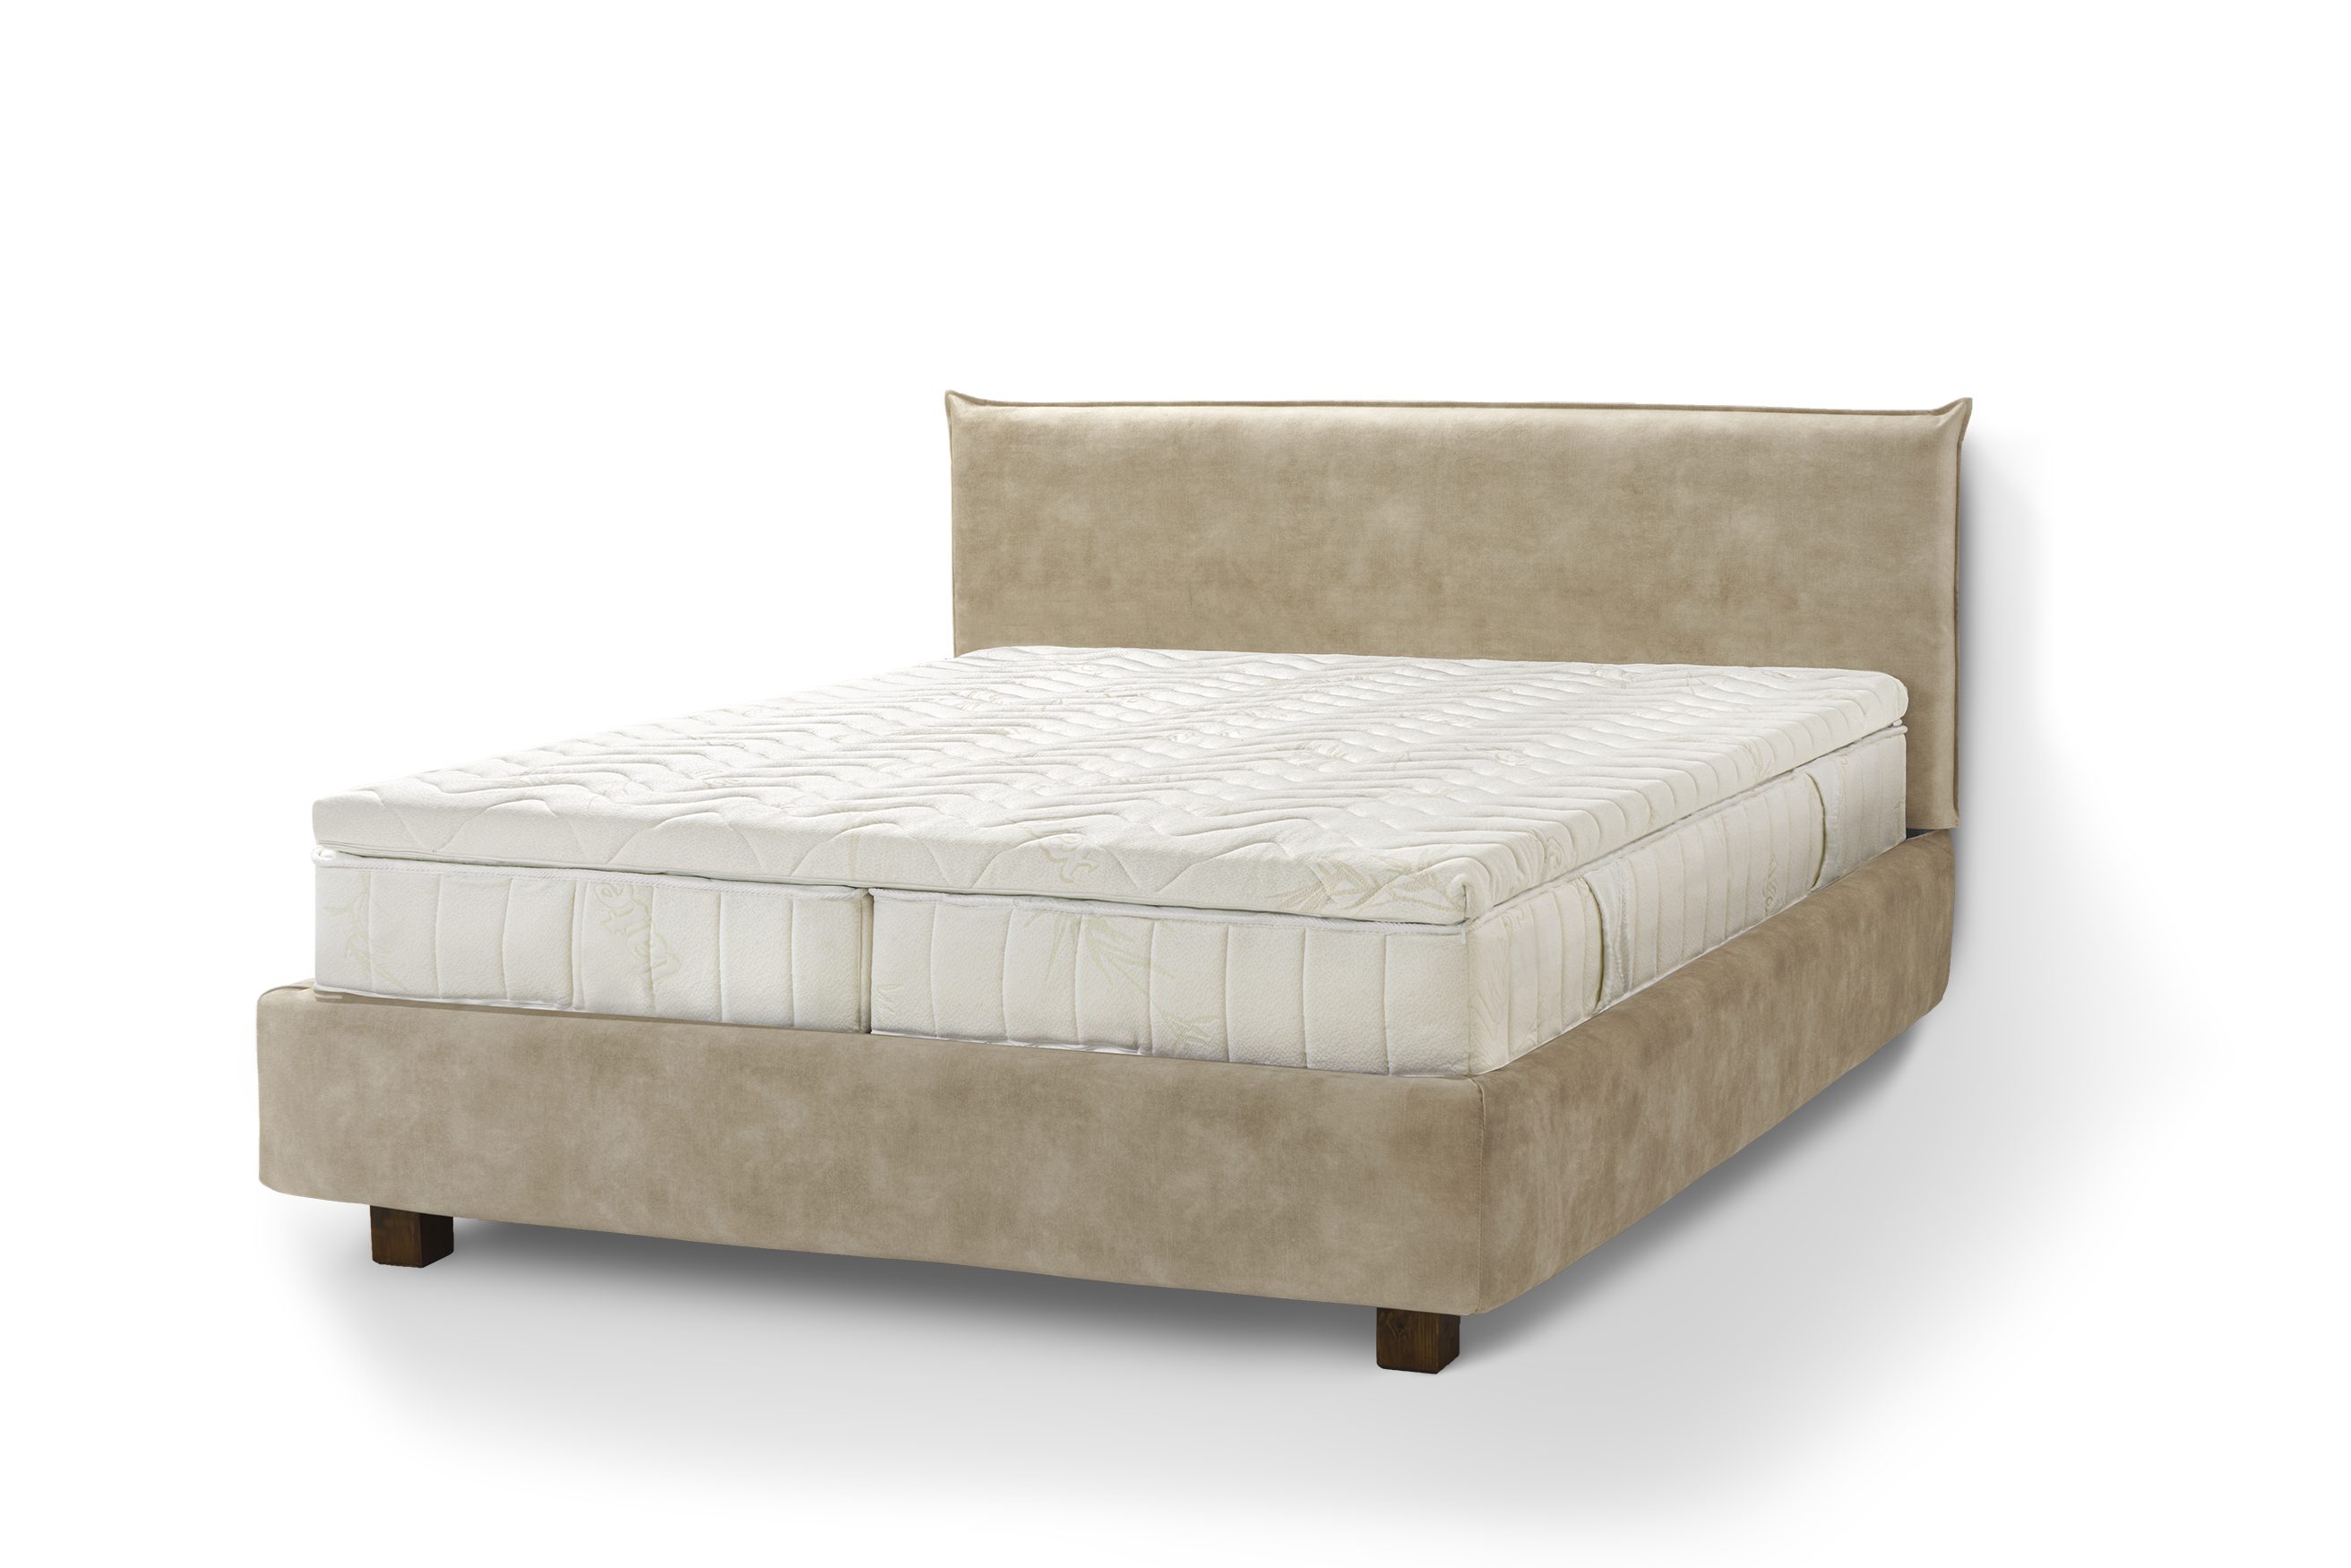 Puro, Plüsch aus Massivholz Letti Moderni hergestellt hochwertigem Holzbett Sand Bett